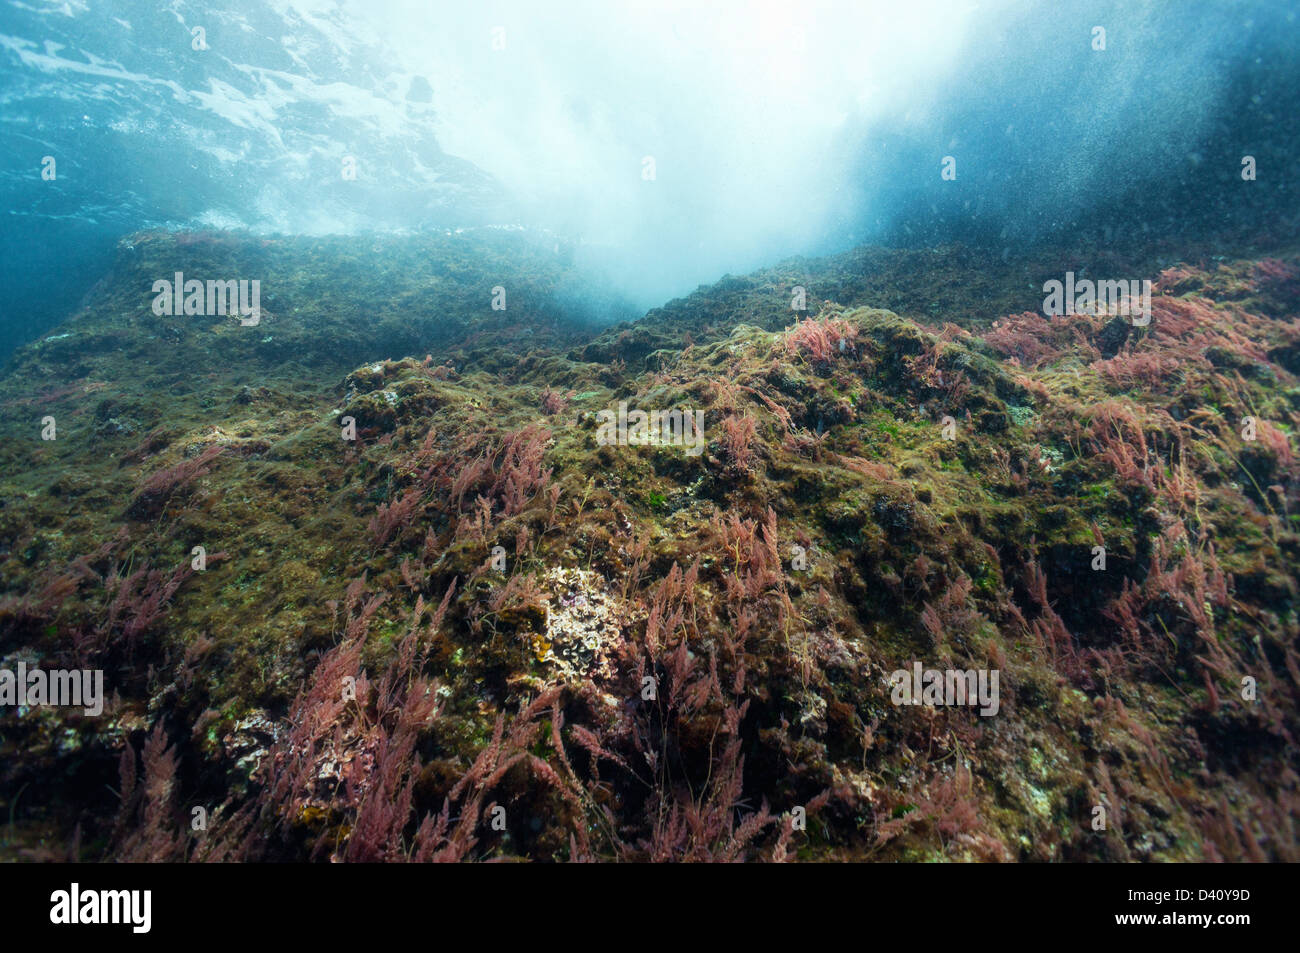 Algae on rocks near surface of the sea, underwater view, Europe Stock Photo